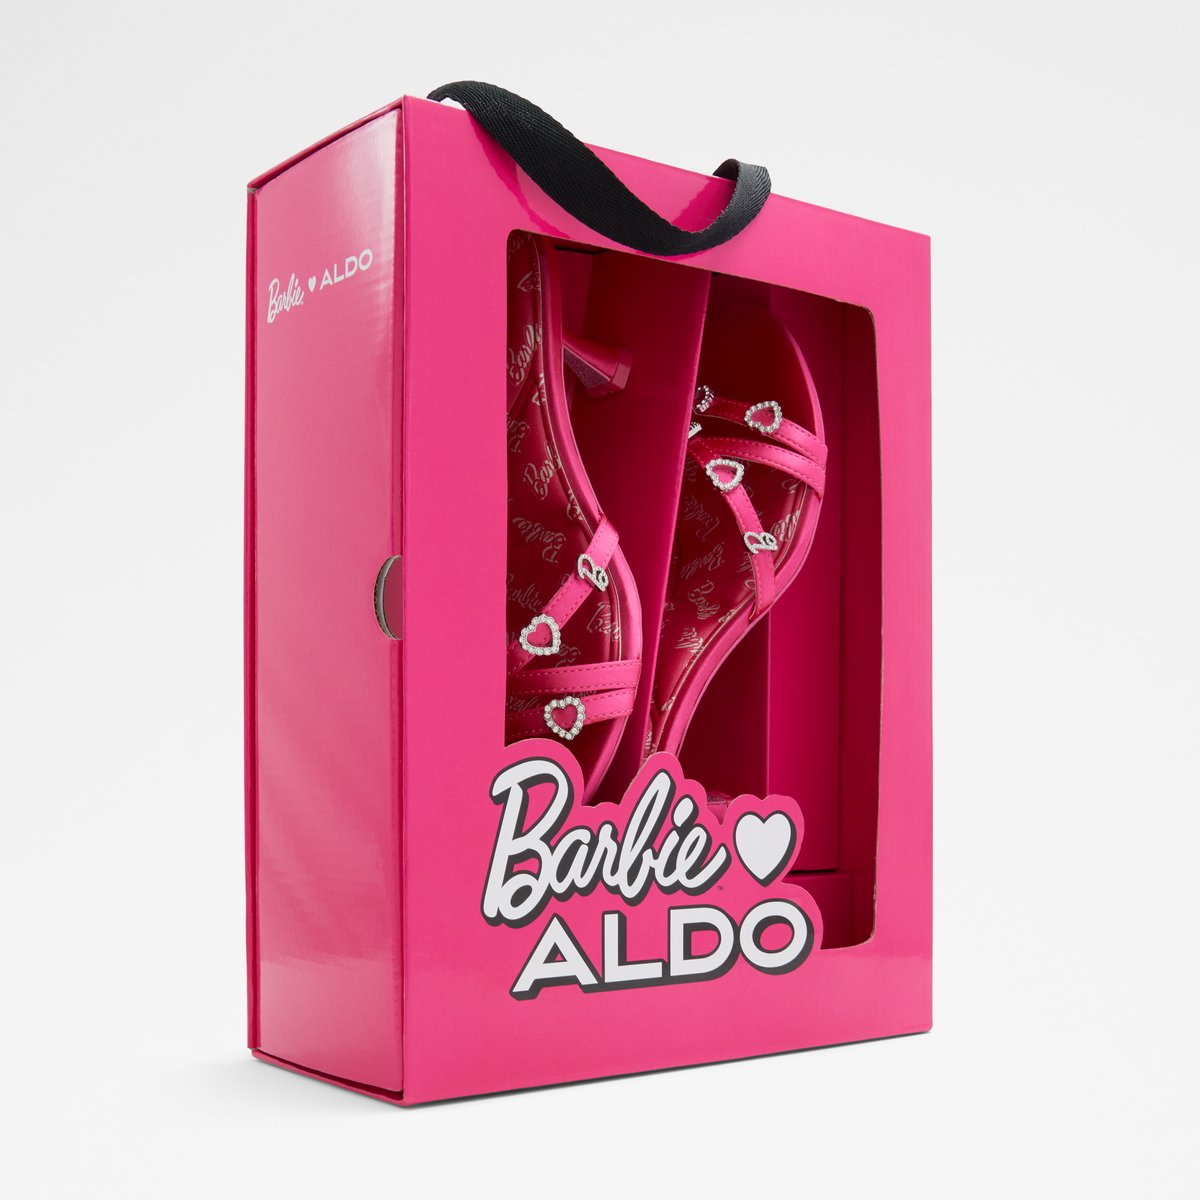 Barbiemule Women Shoes - Fuchsia - ALDO KSA